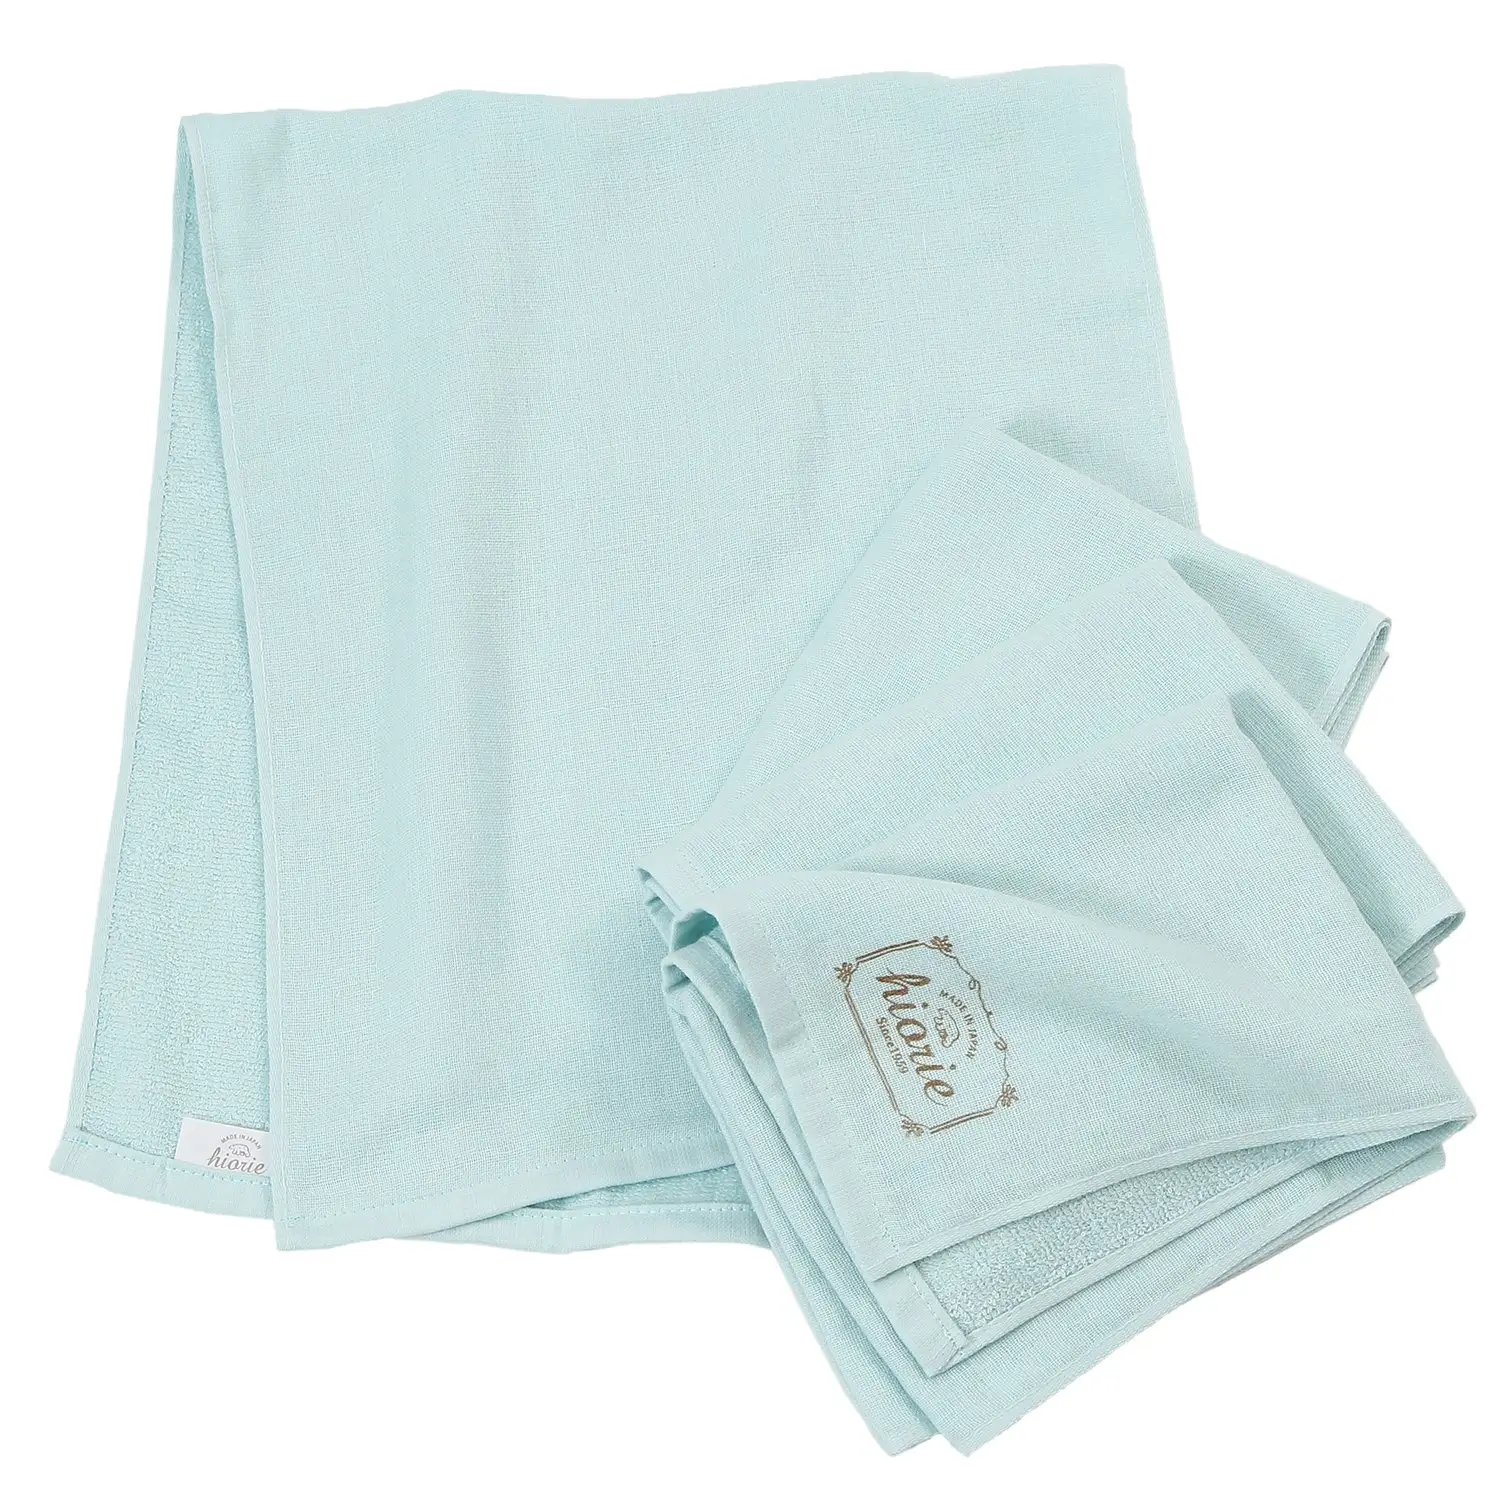 [Wholesale Products] HIORIE Osaka Natural Color Gauze Towel 100% Cotton Hand Towel 34cm*85cm Low MOQ Washable Quick Dry Sky Blue